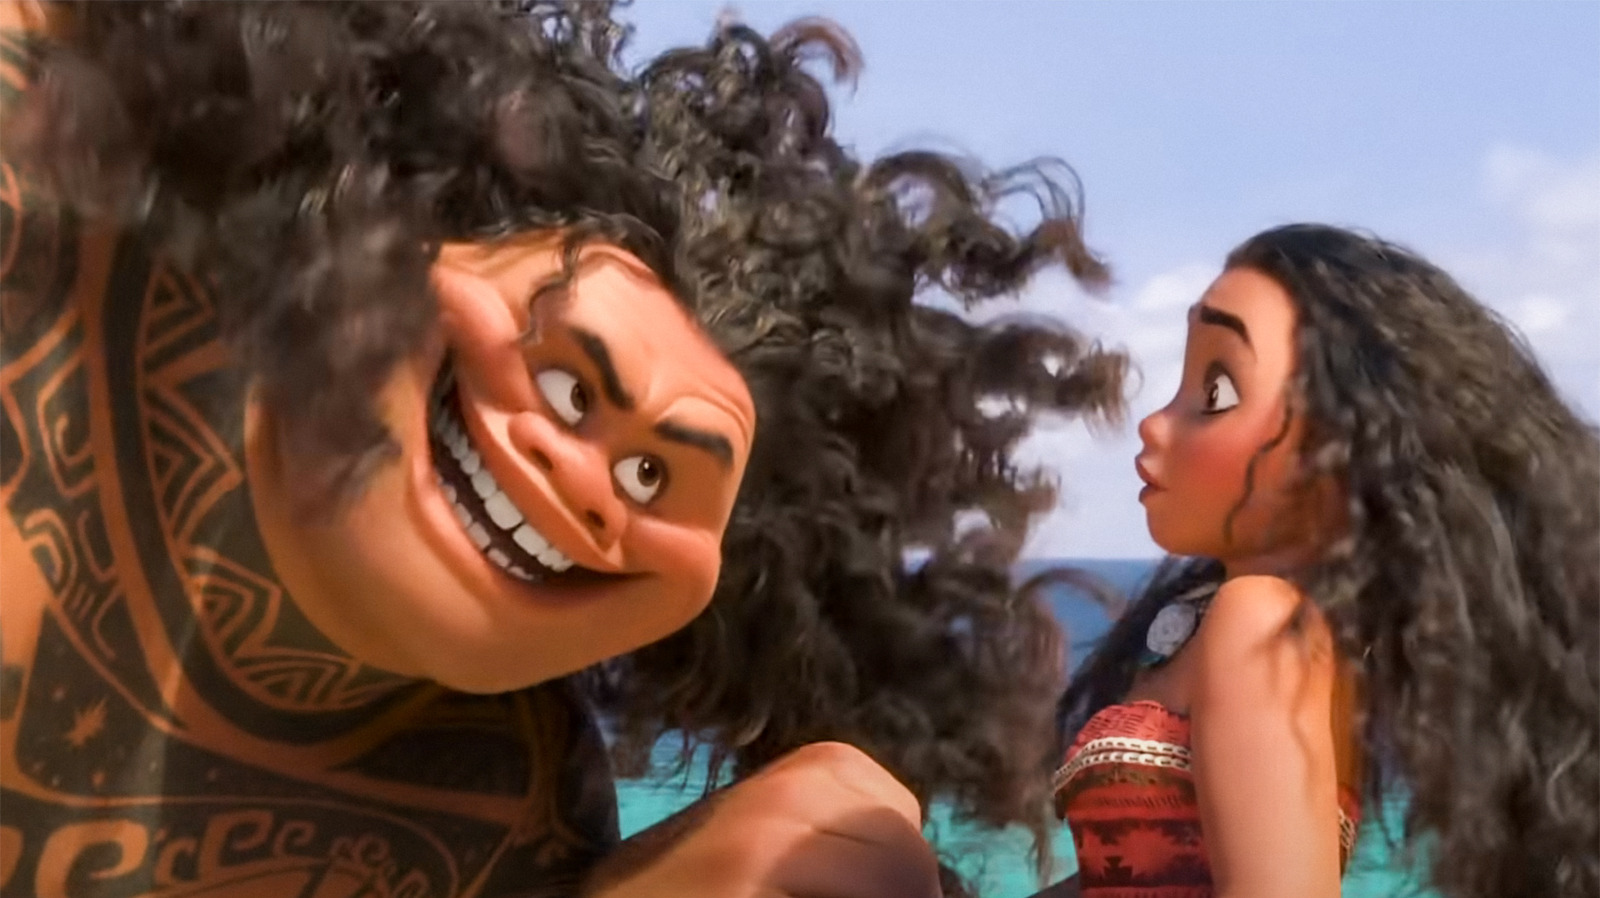 Disney & Dwayne Johnson Announce Live-Action 'Moana' Adaptation – Billboard